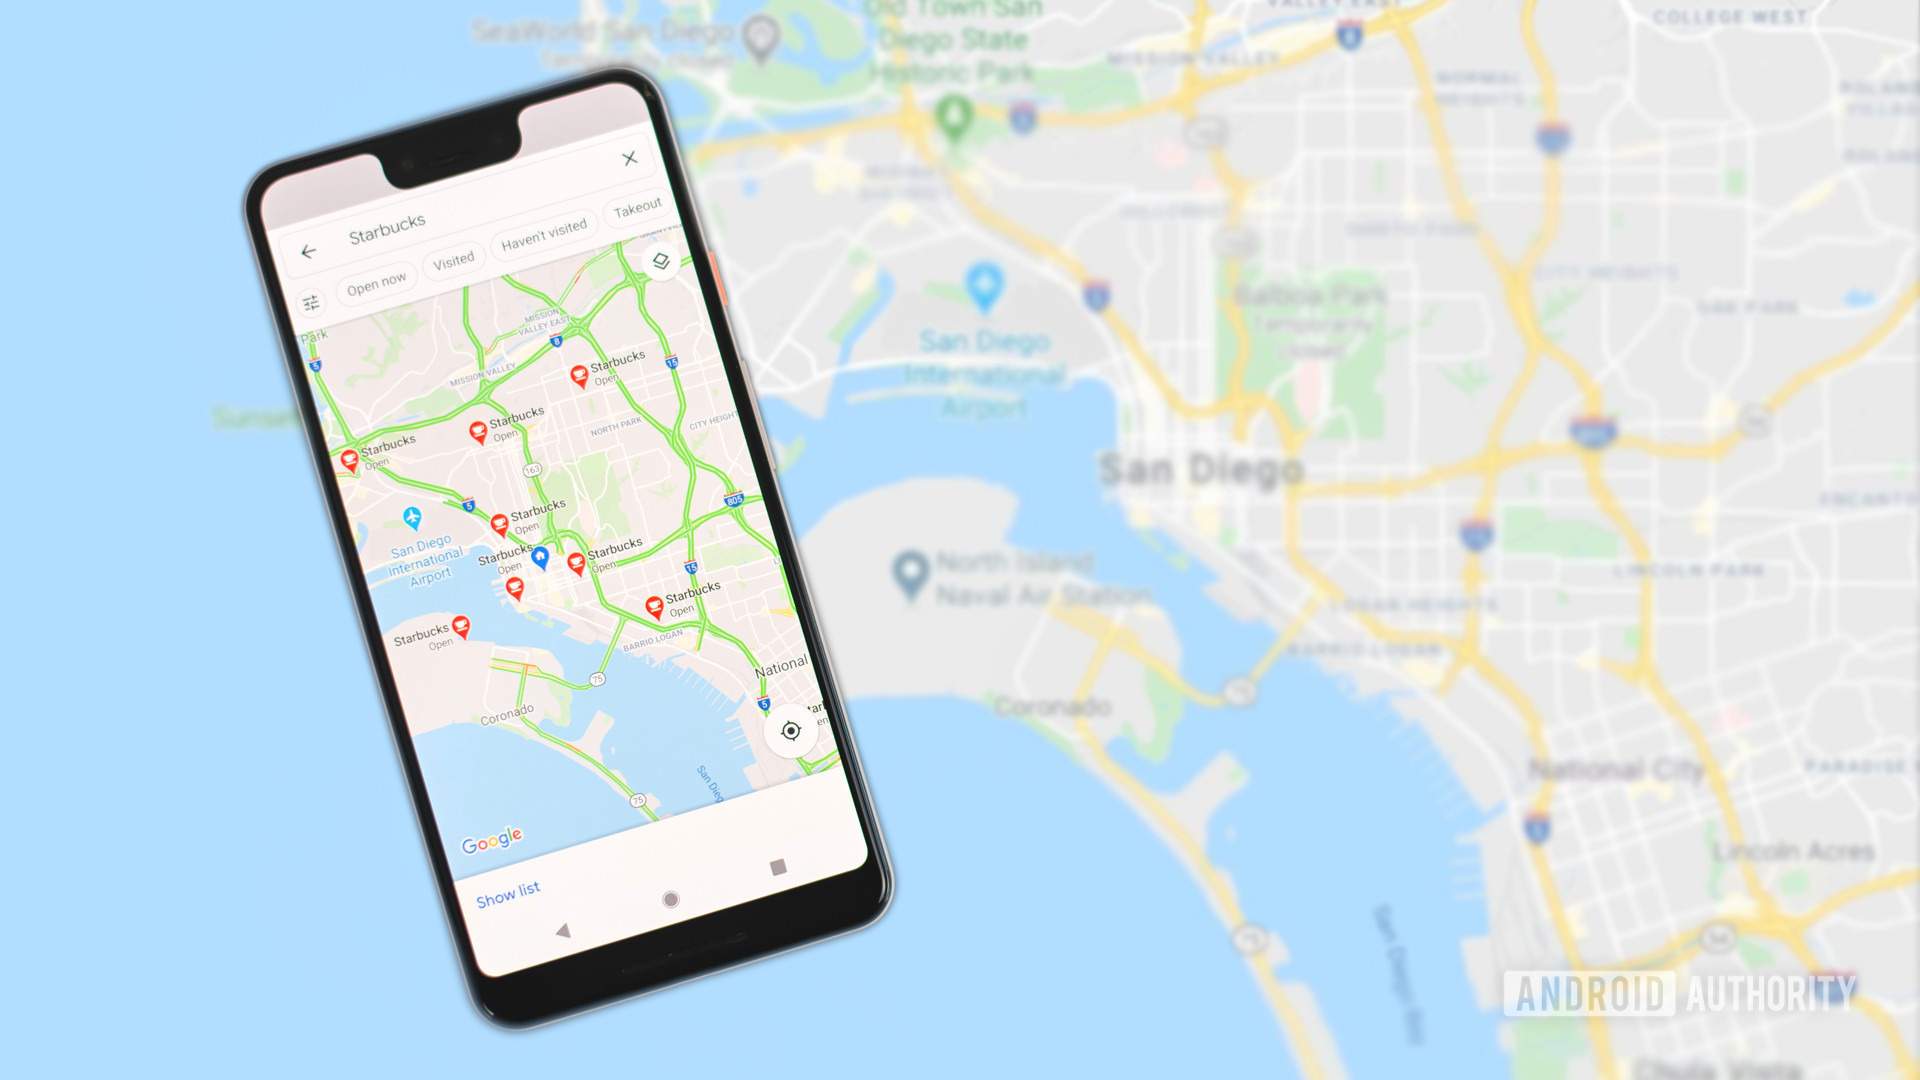 Google Maps searching for Starbucks